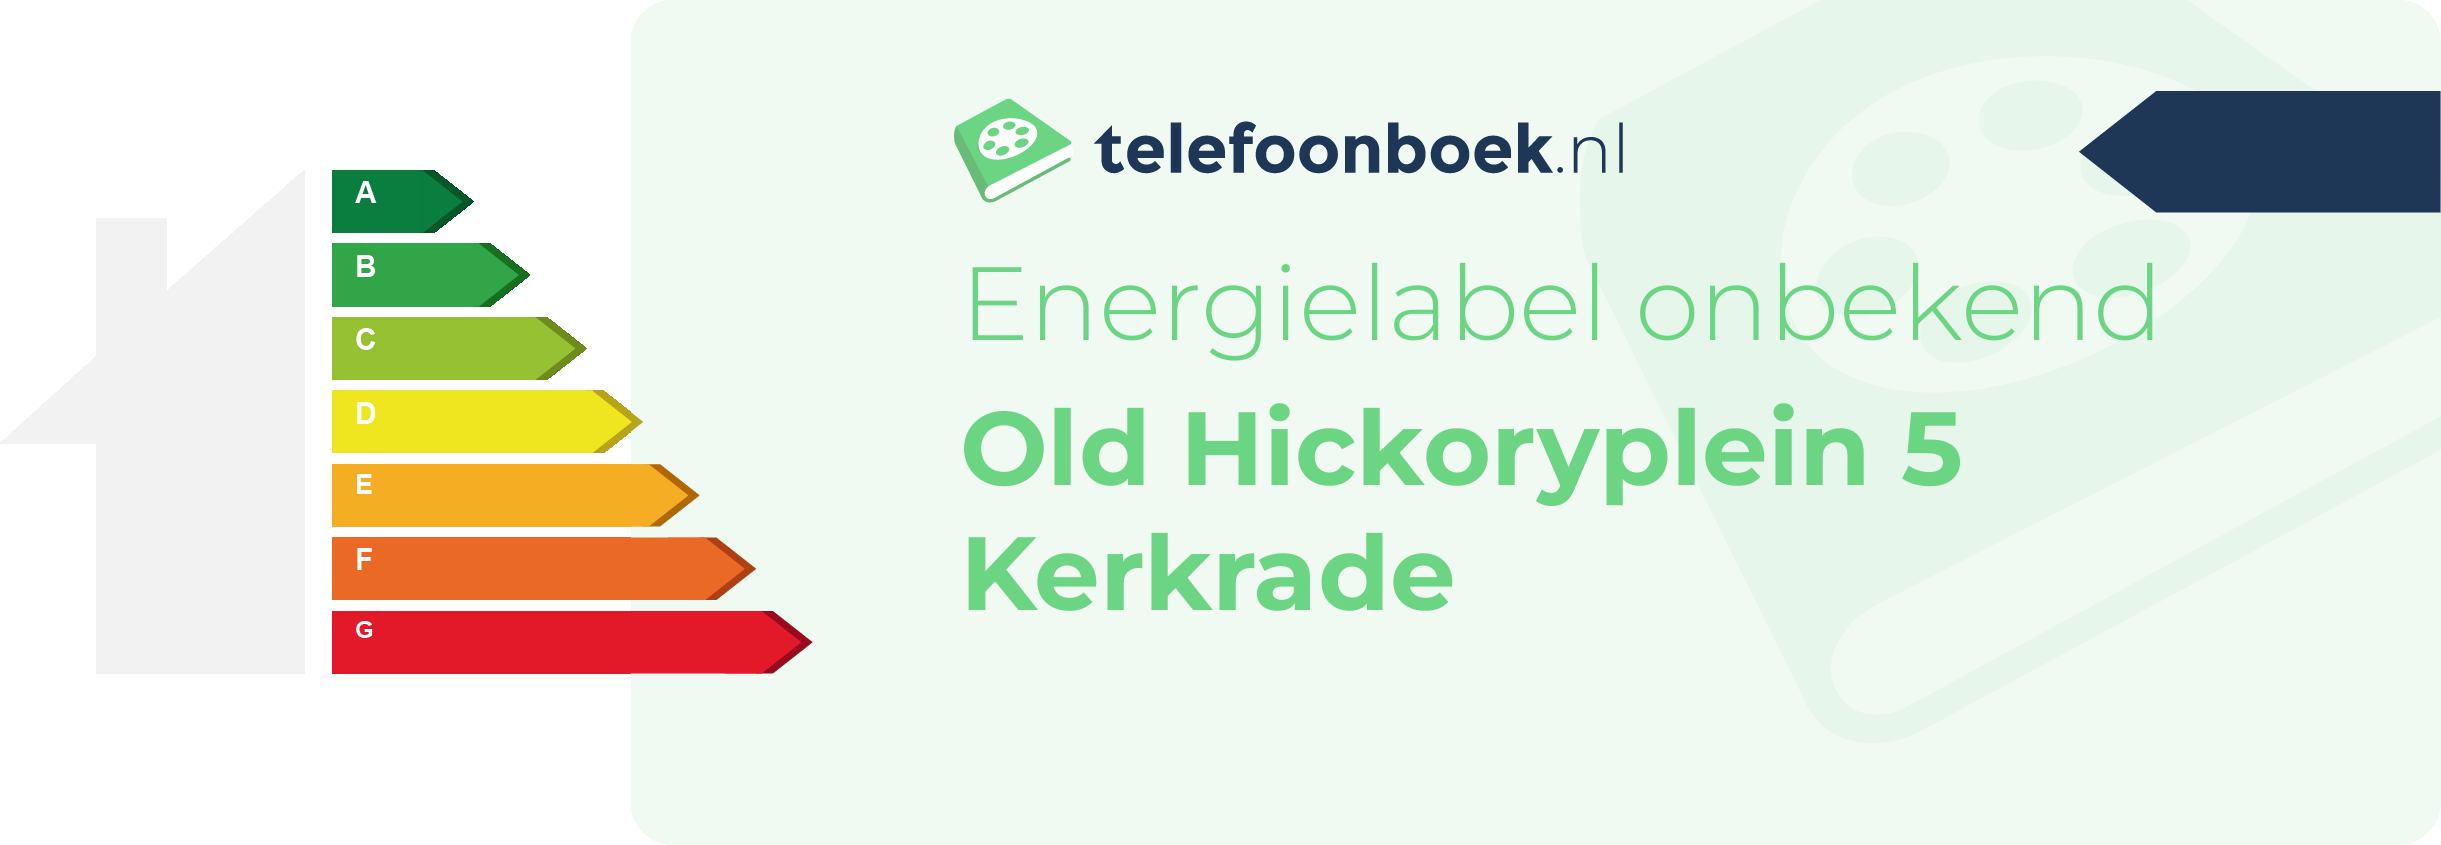 Energielabel Old Hickoryplein 5 Kerkrade